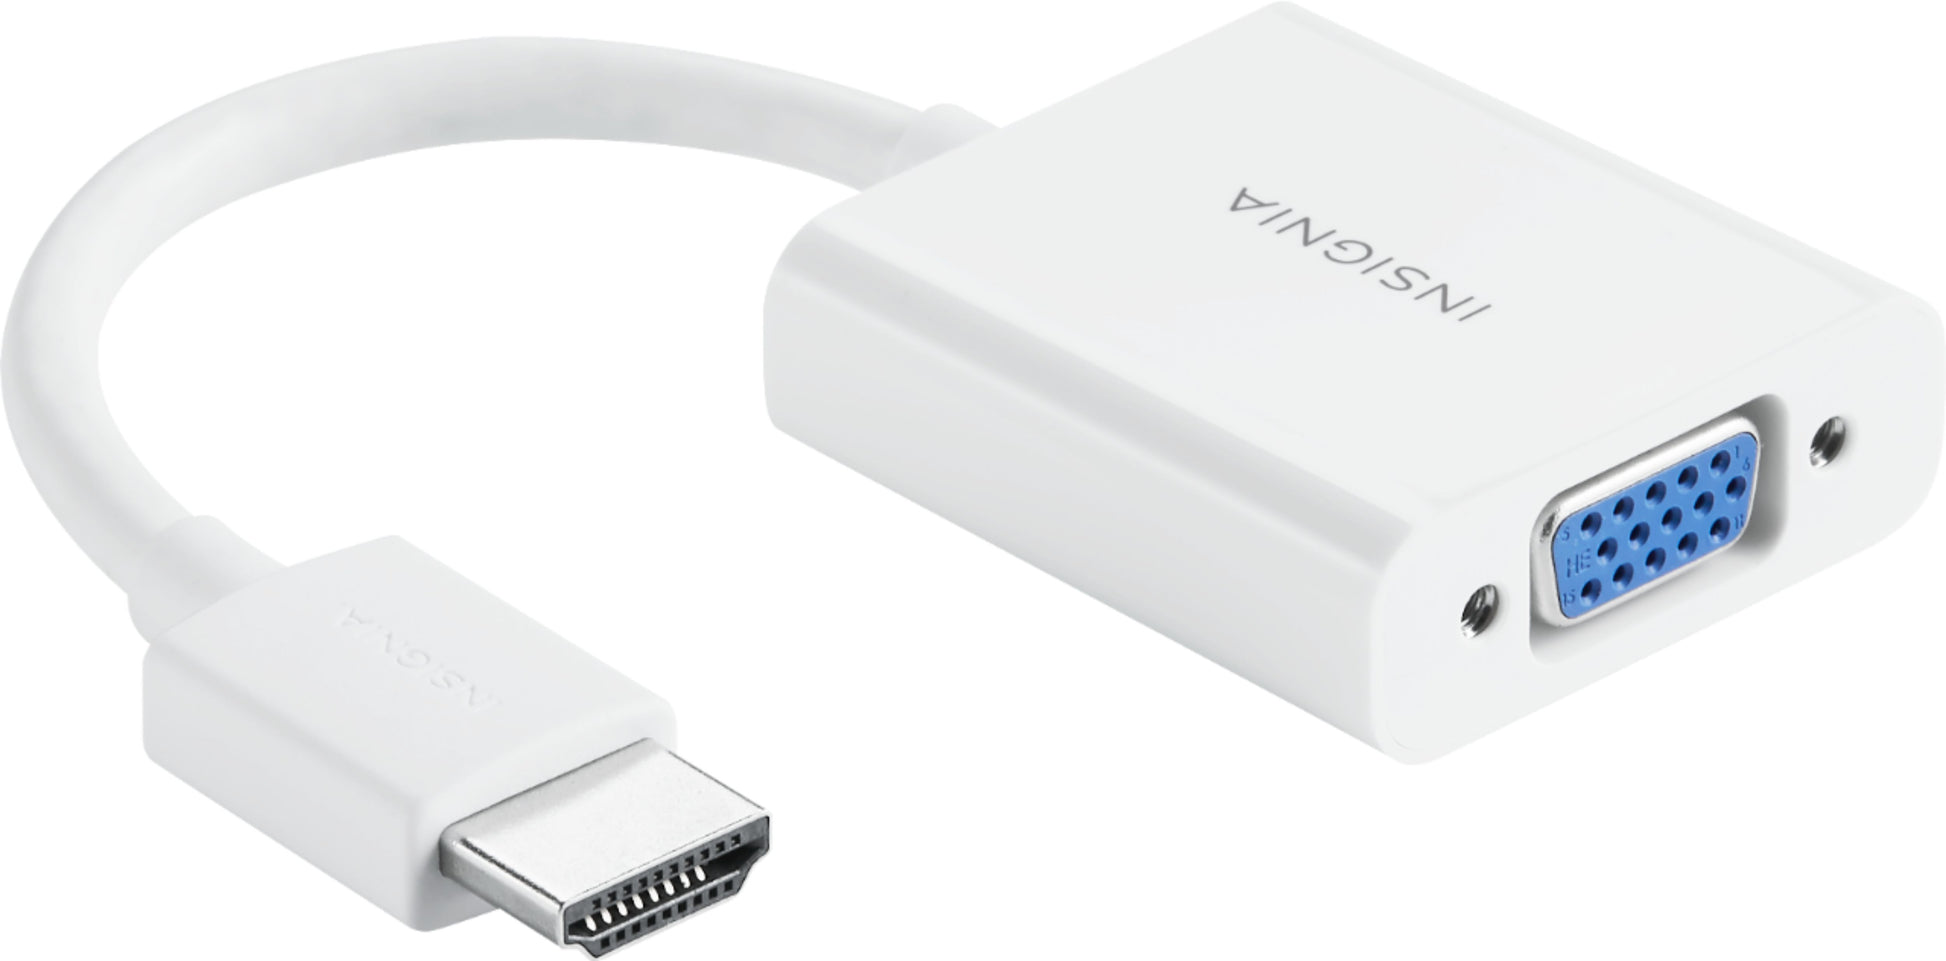 Insignia - HDMI to VGA Adapter - White - Rekes Sales